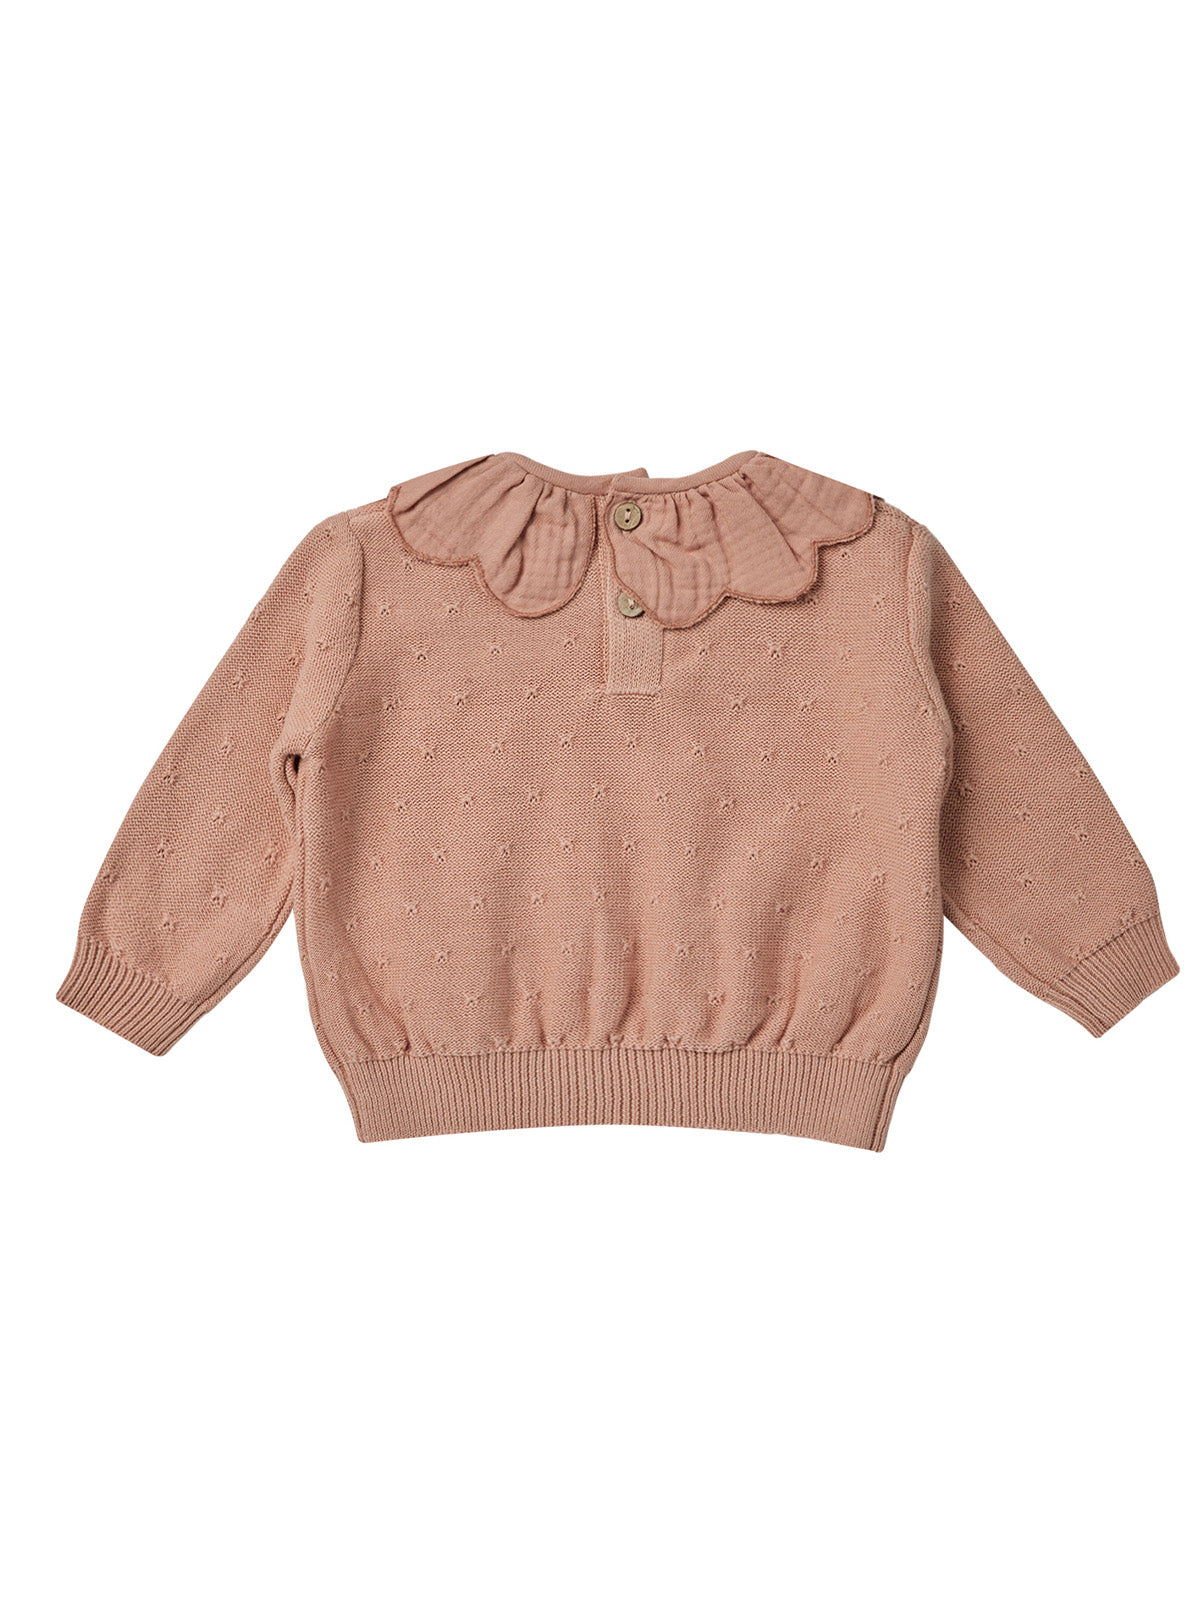 Organic Petal Knit Sweater, Rose